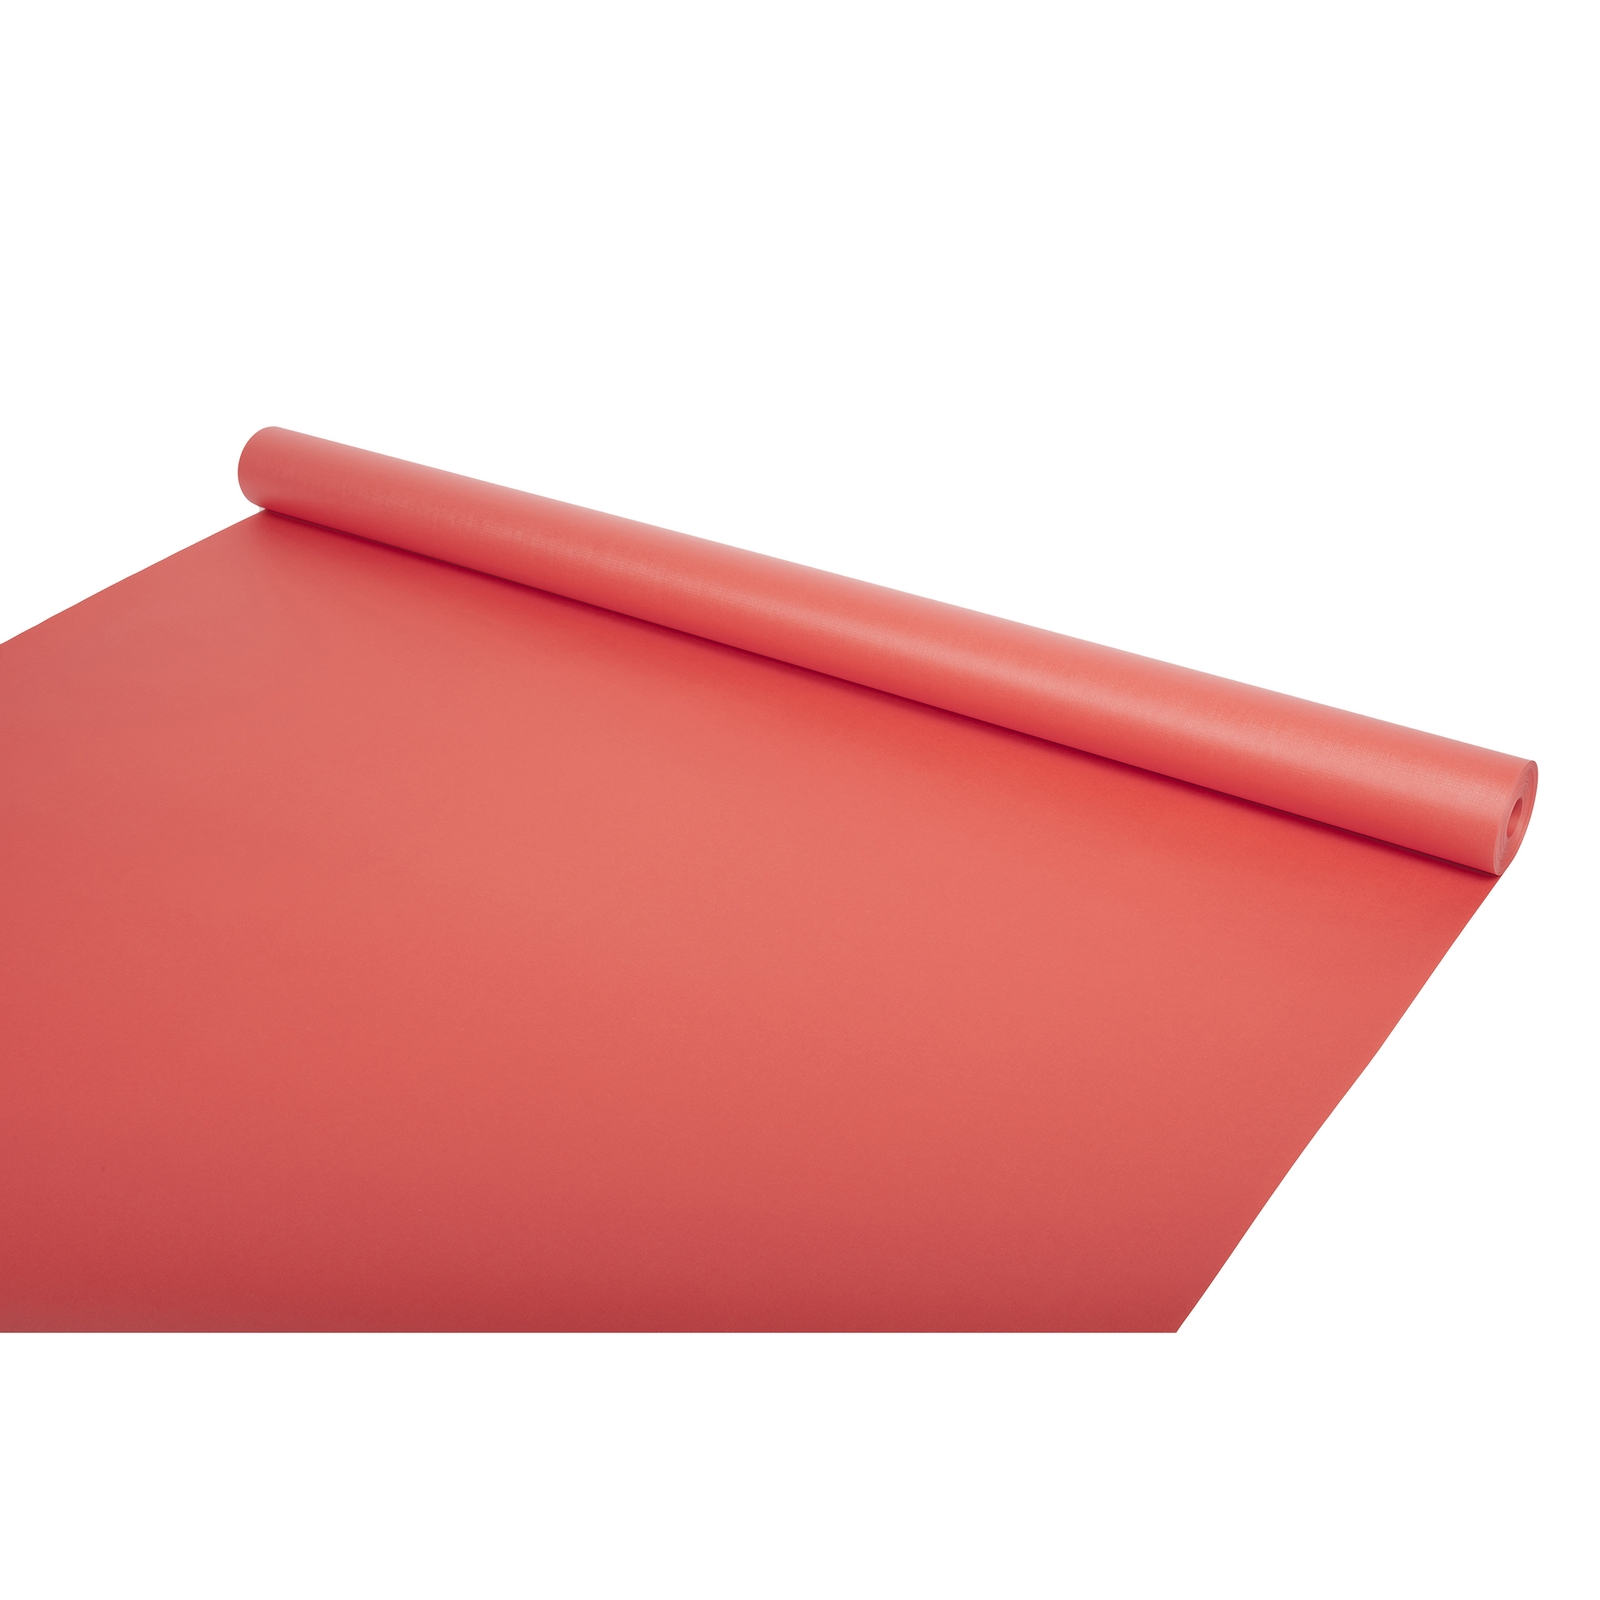 EduCraft Scarlet Red Jumbo Durafrieze Poster Display Roll - 1020mm x 25m - Each